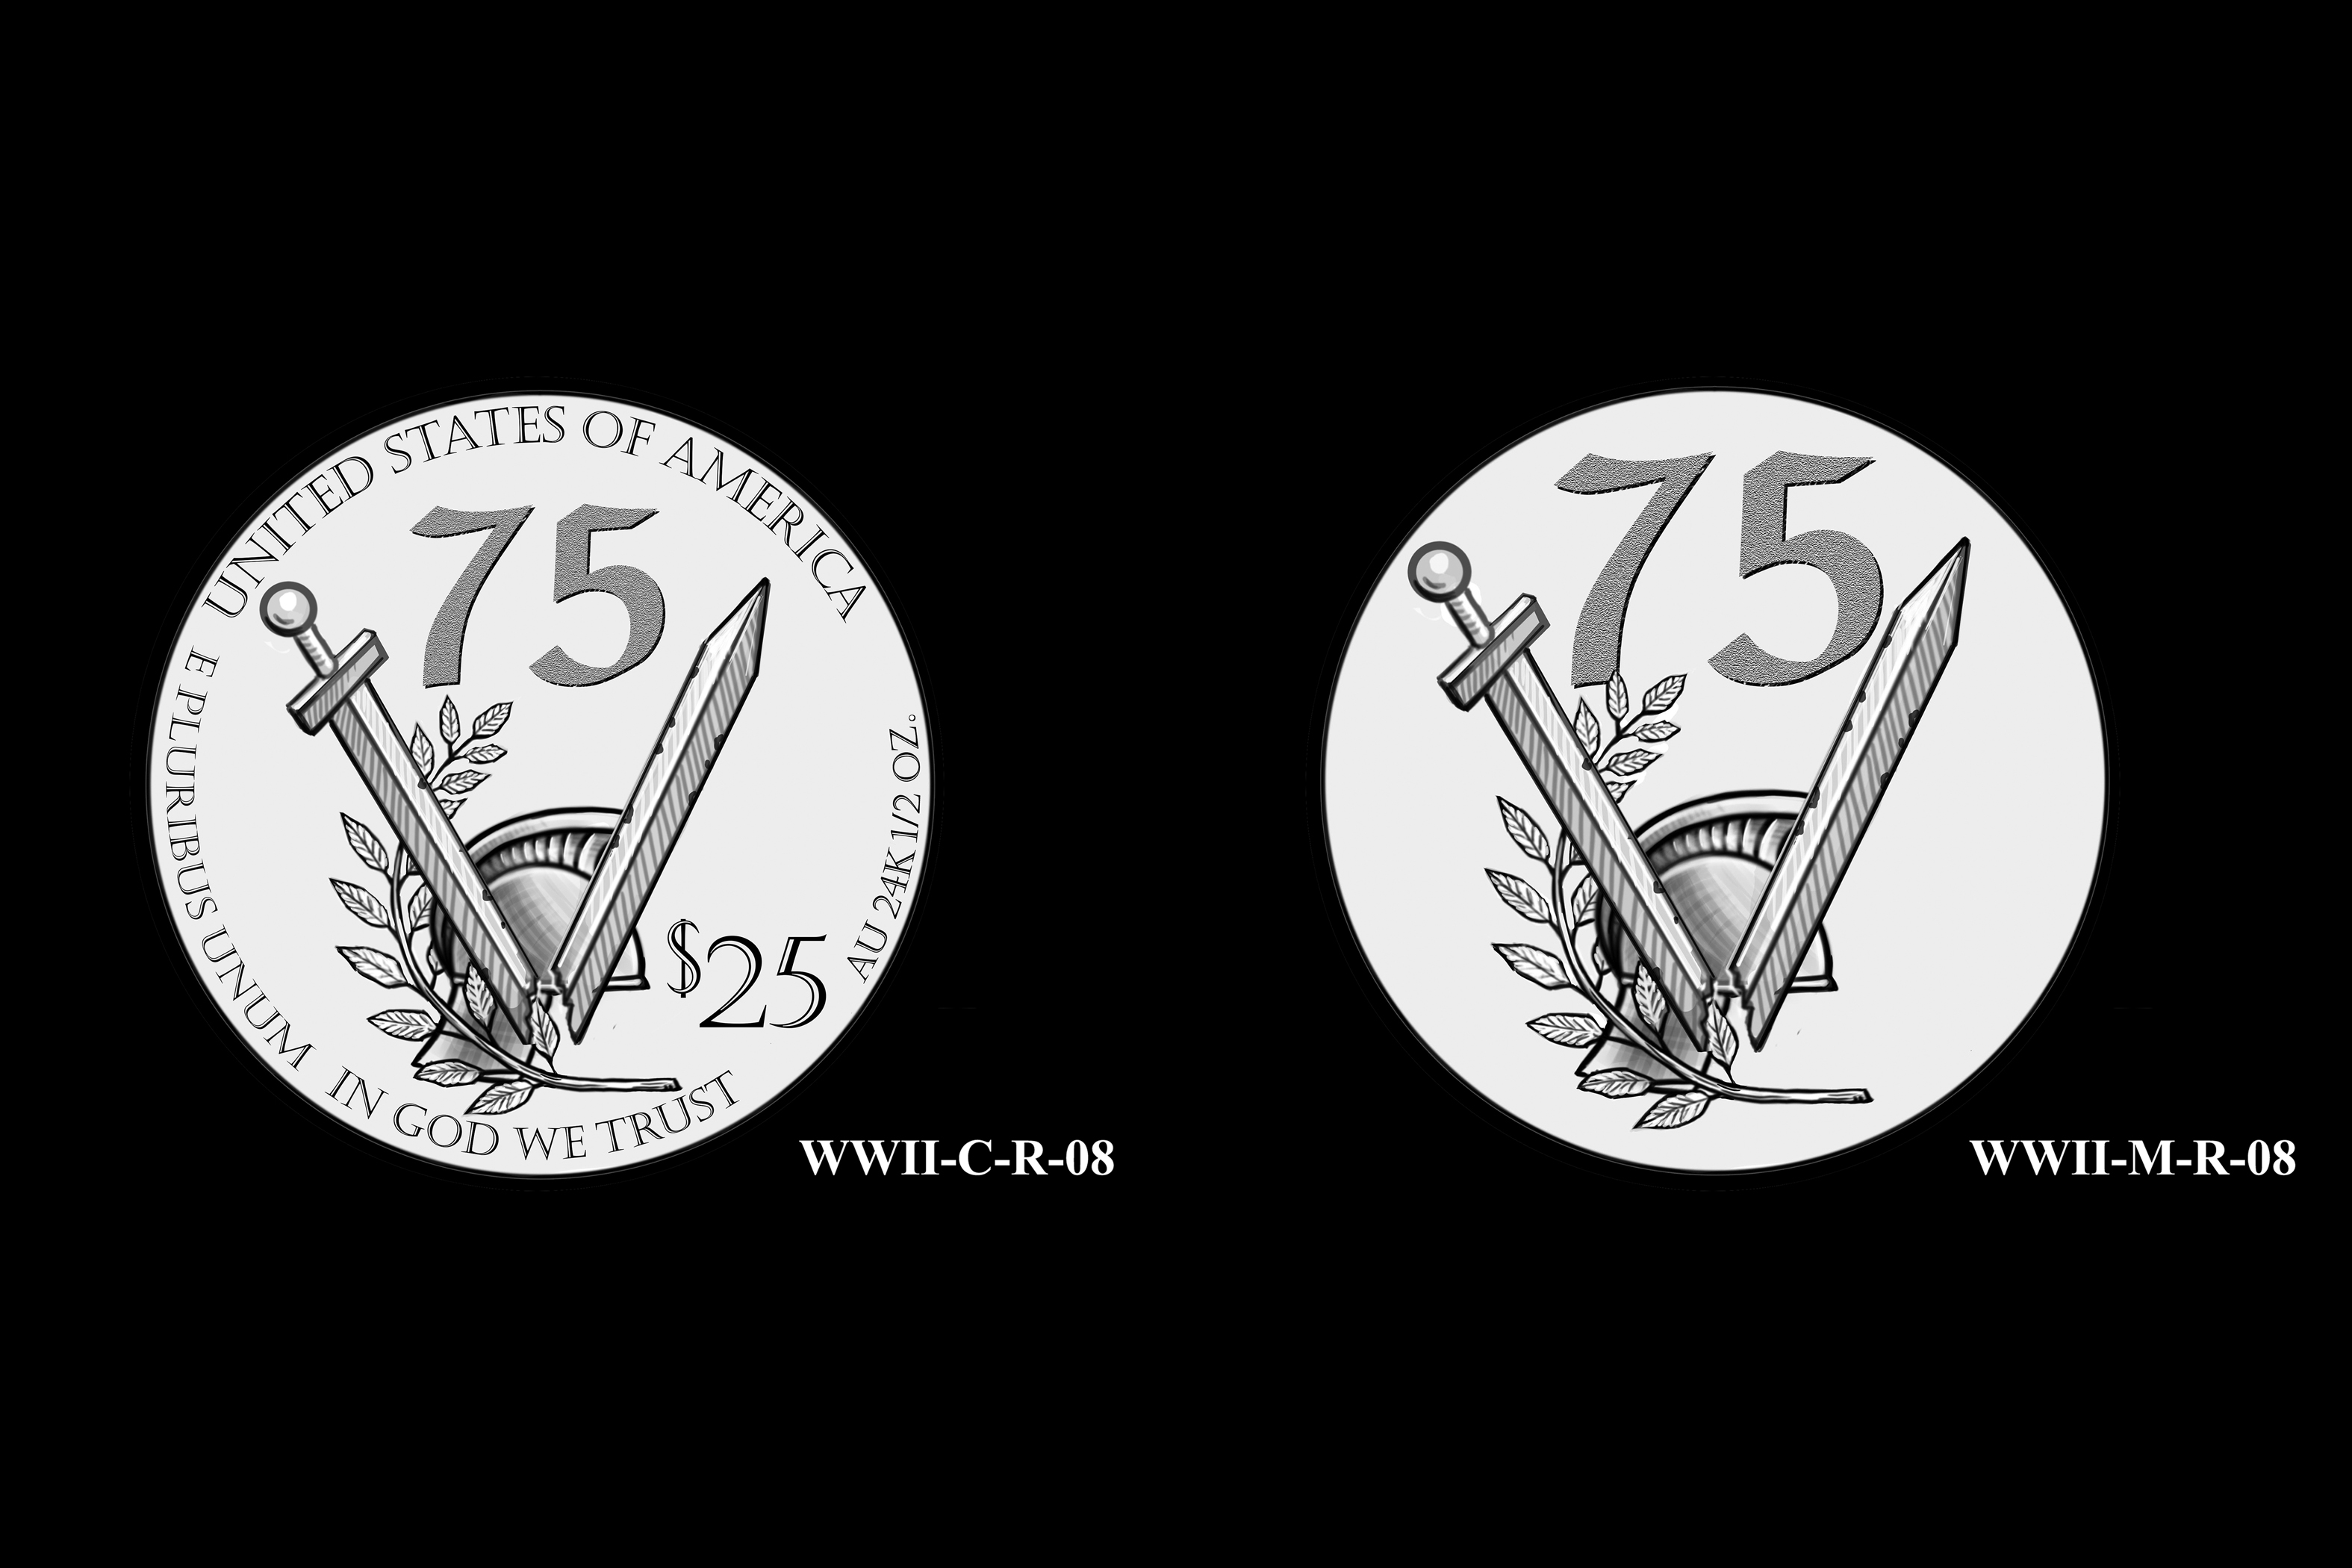 WWII-C-R-08 and WWII-M-R-08 -- End of World War II 75th Anniversary Program - Reverse